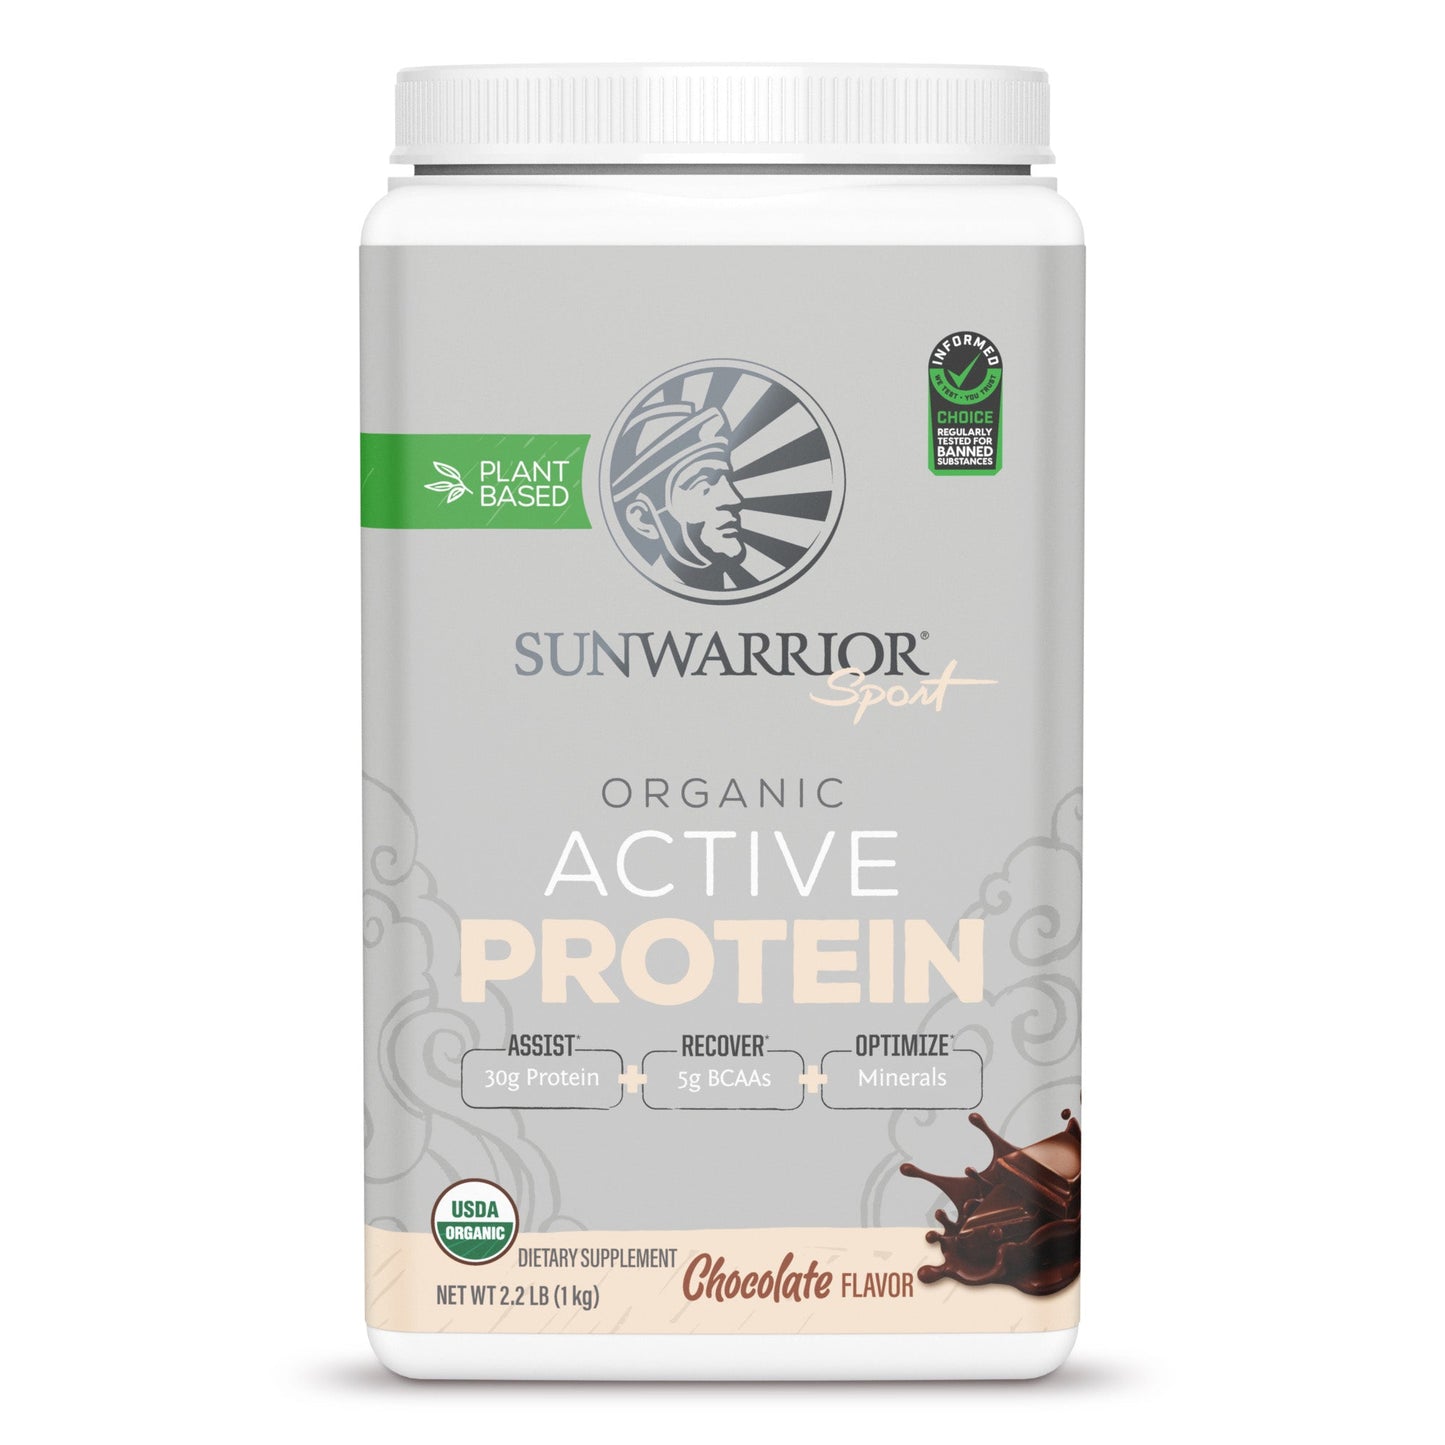 Active Protein - Chocolate Sunwarrior